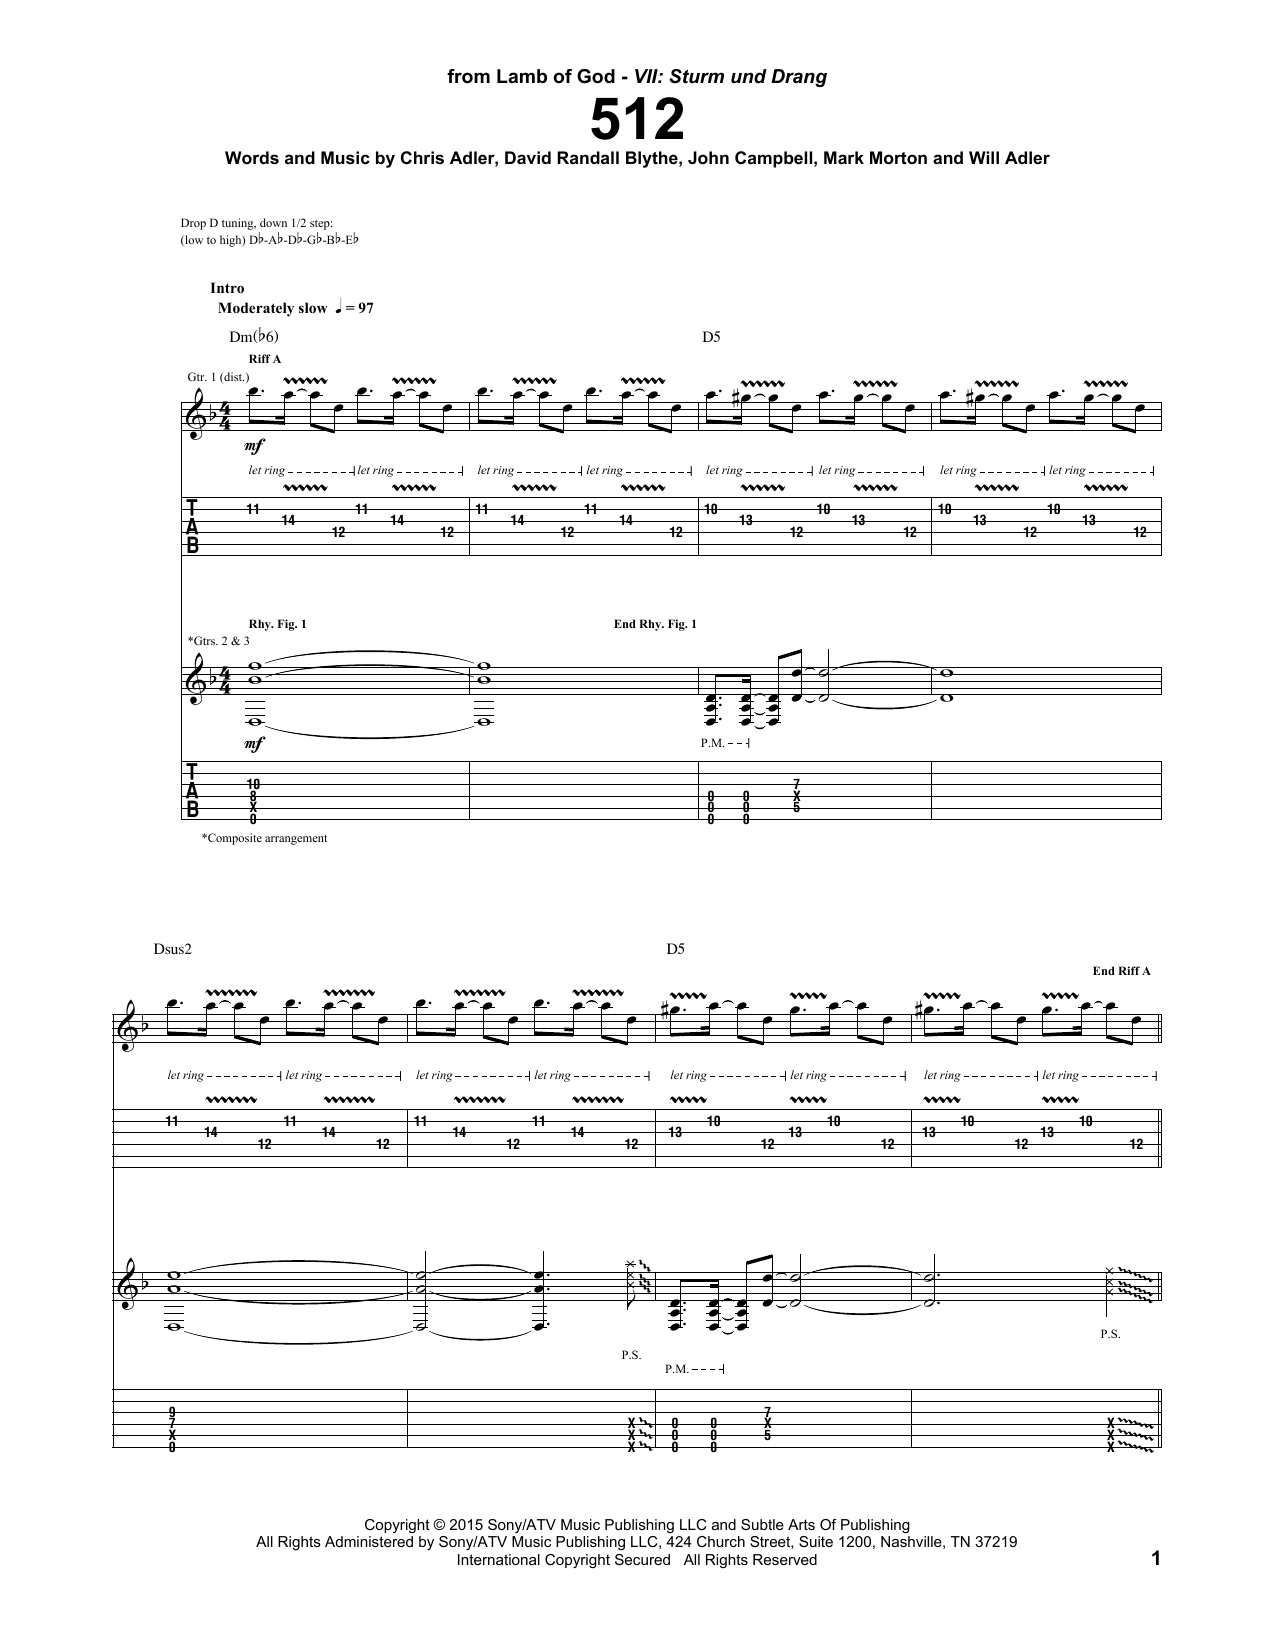 Lamb Of God 512 Sheet Music Notes & Chords for Guitar Tab - Download or Print PDF